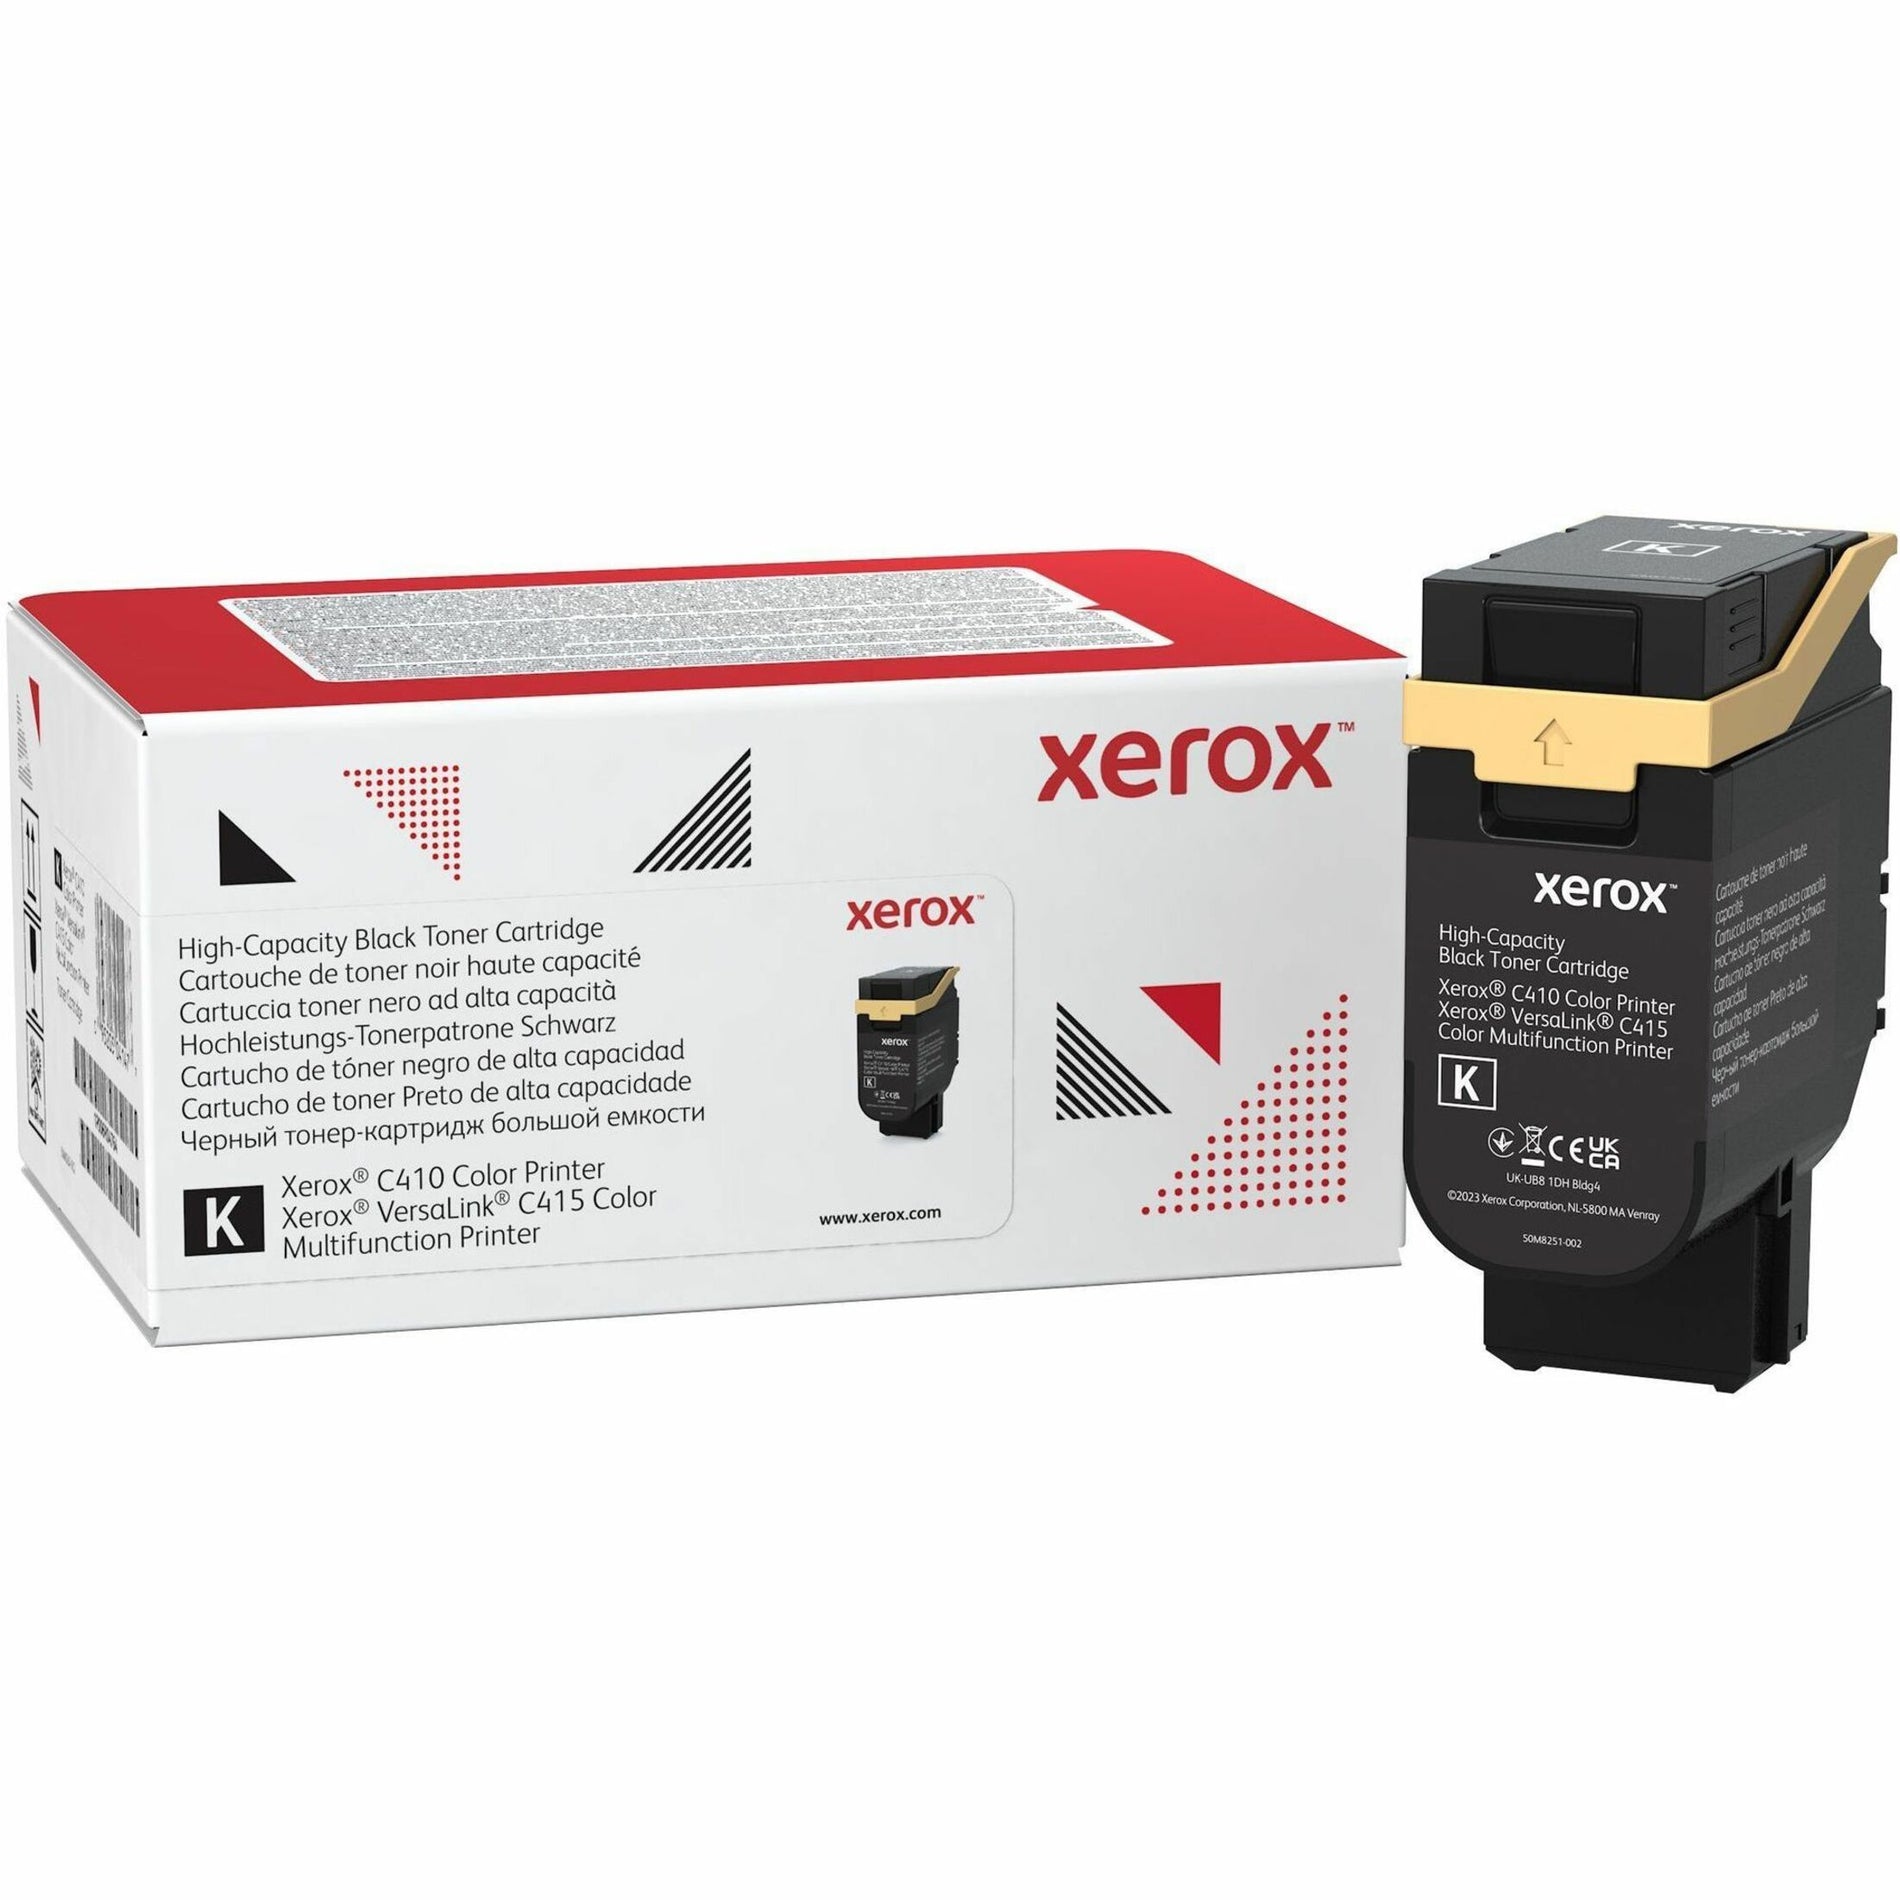 Xerox 006R04685 C410 Black High Capacity Toner Cartridge, 10500 Page Yield